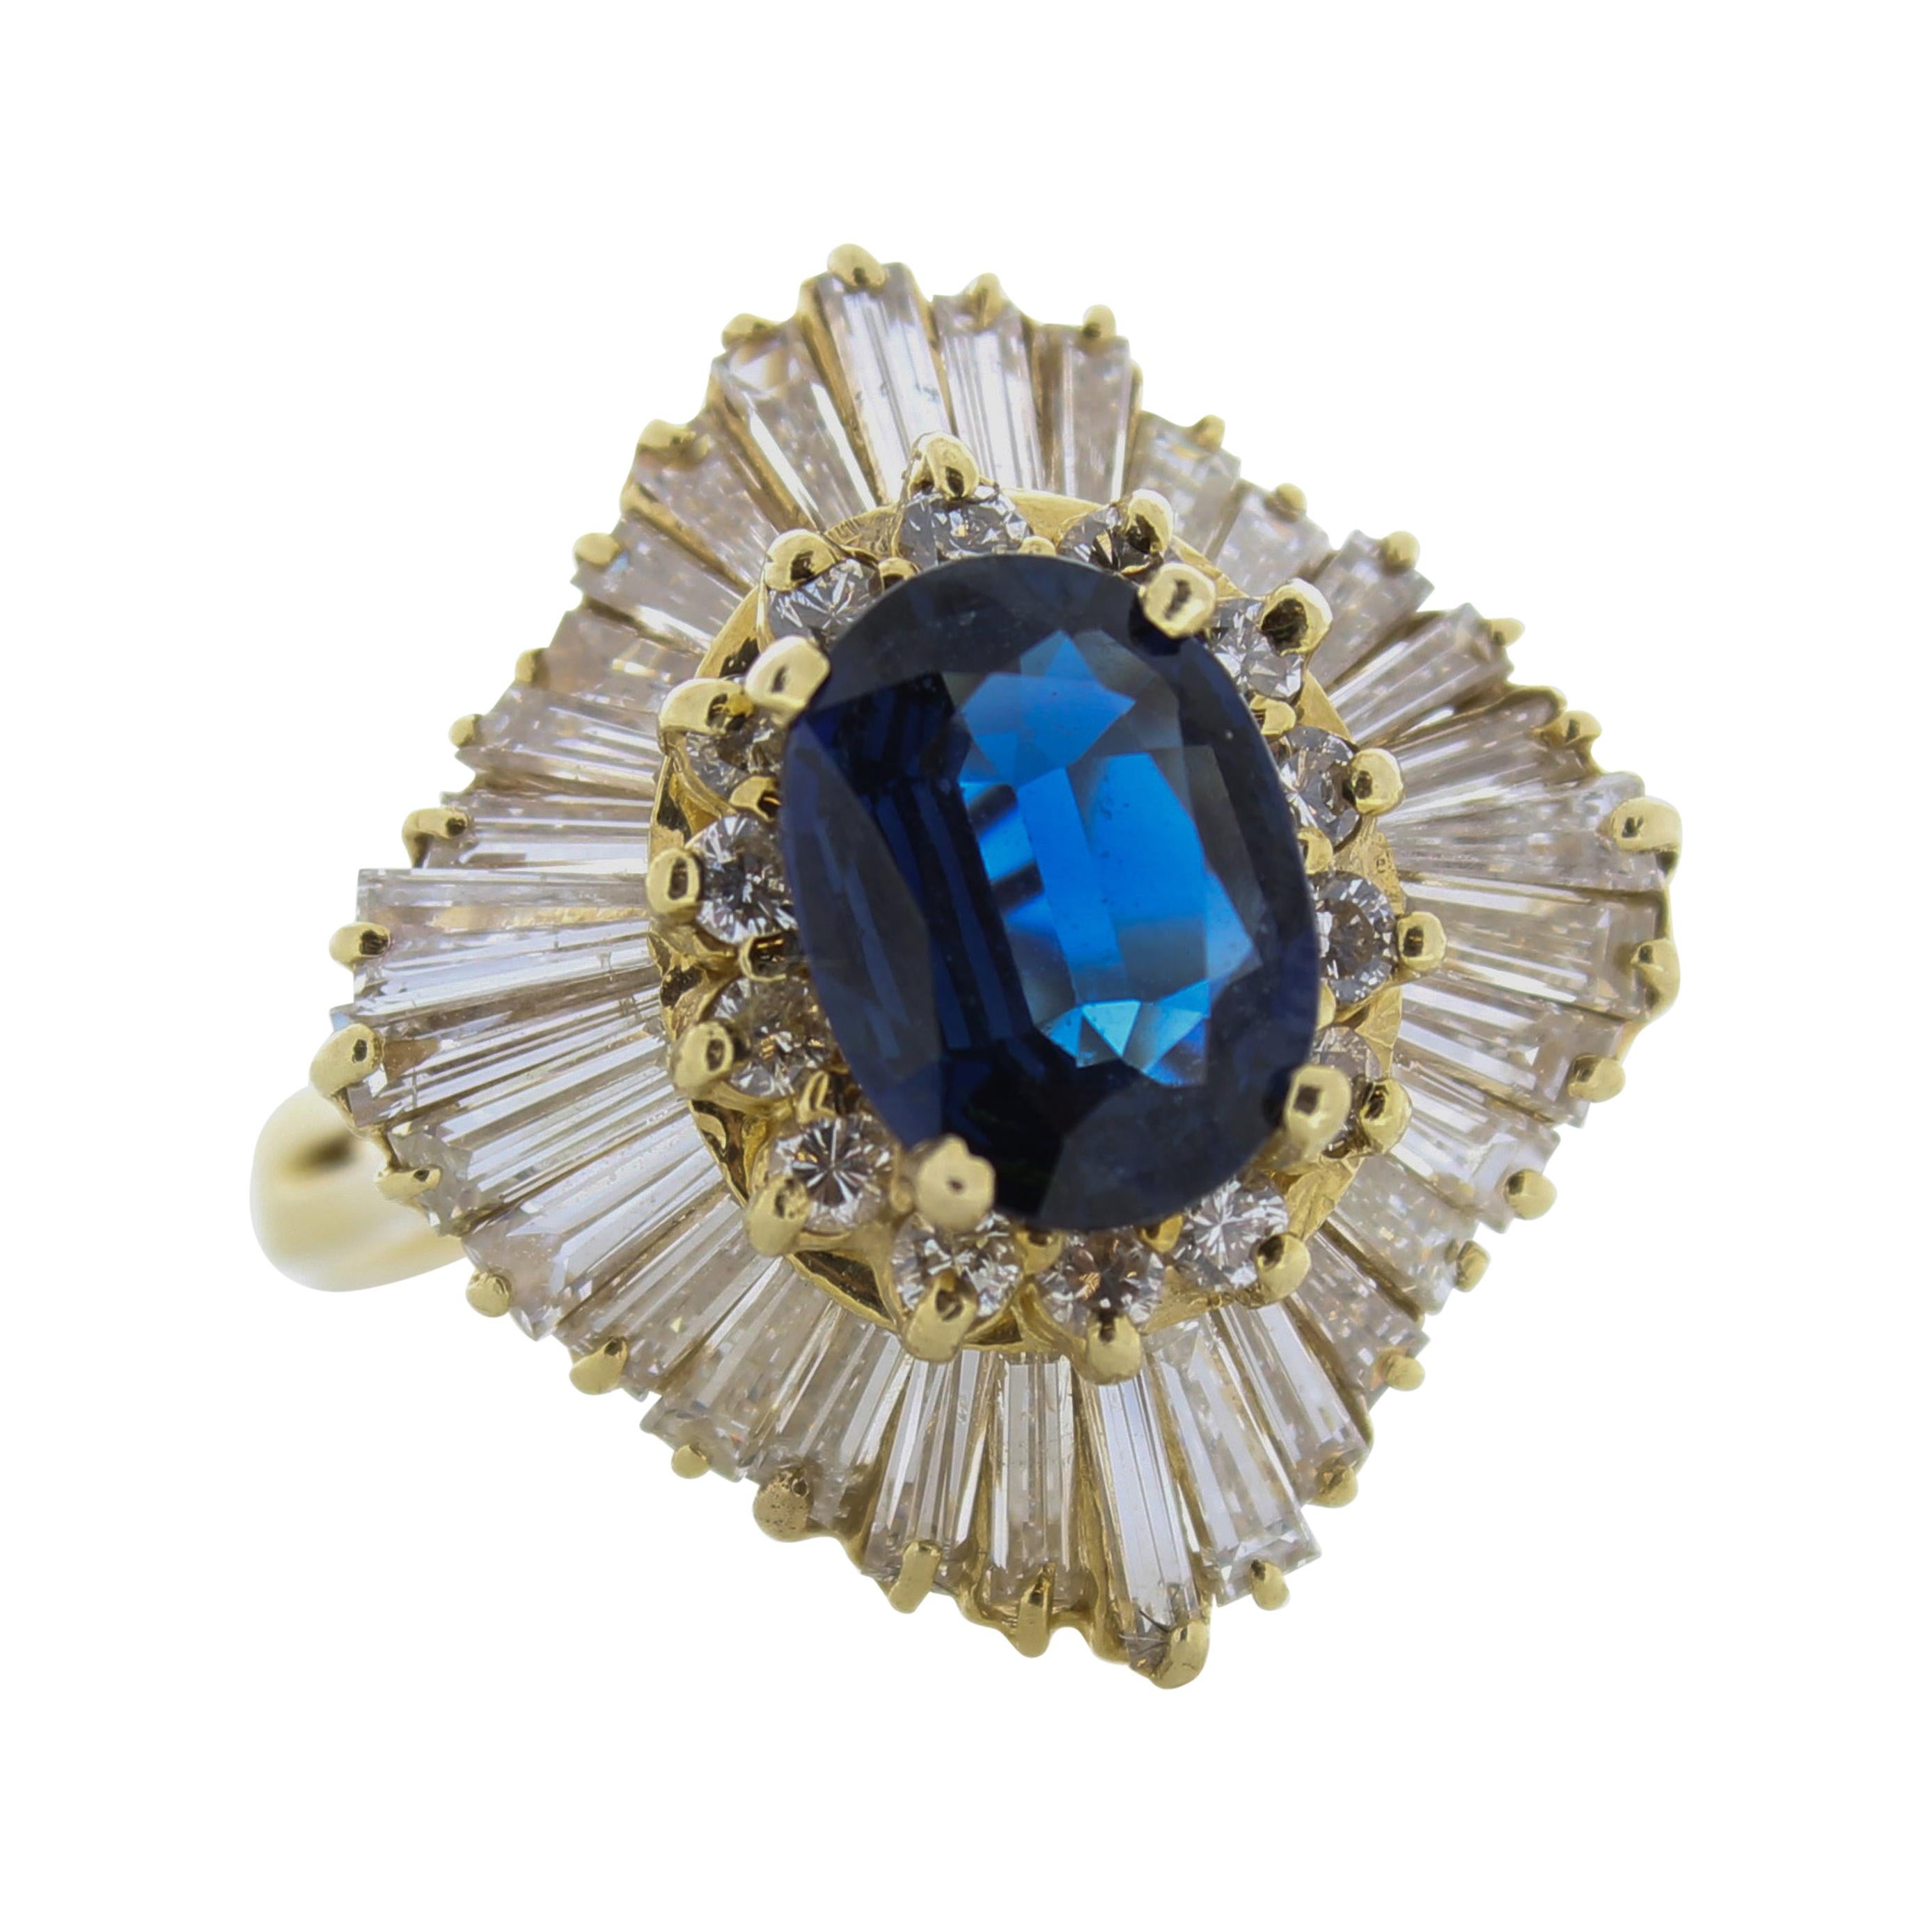 2 Carat Oval Sapphire & Diamond Ring in 14k Yellow Gold